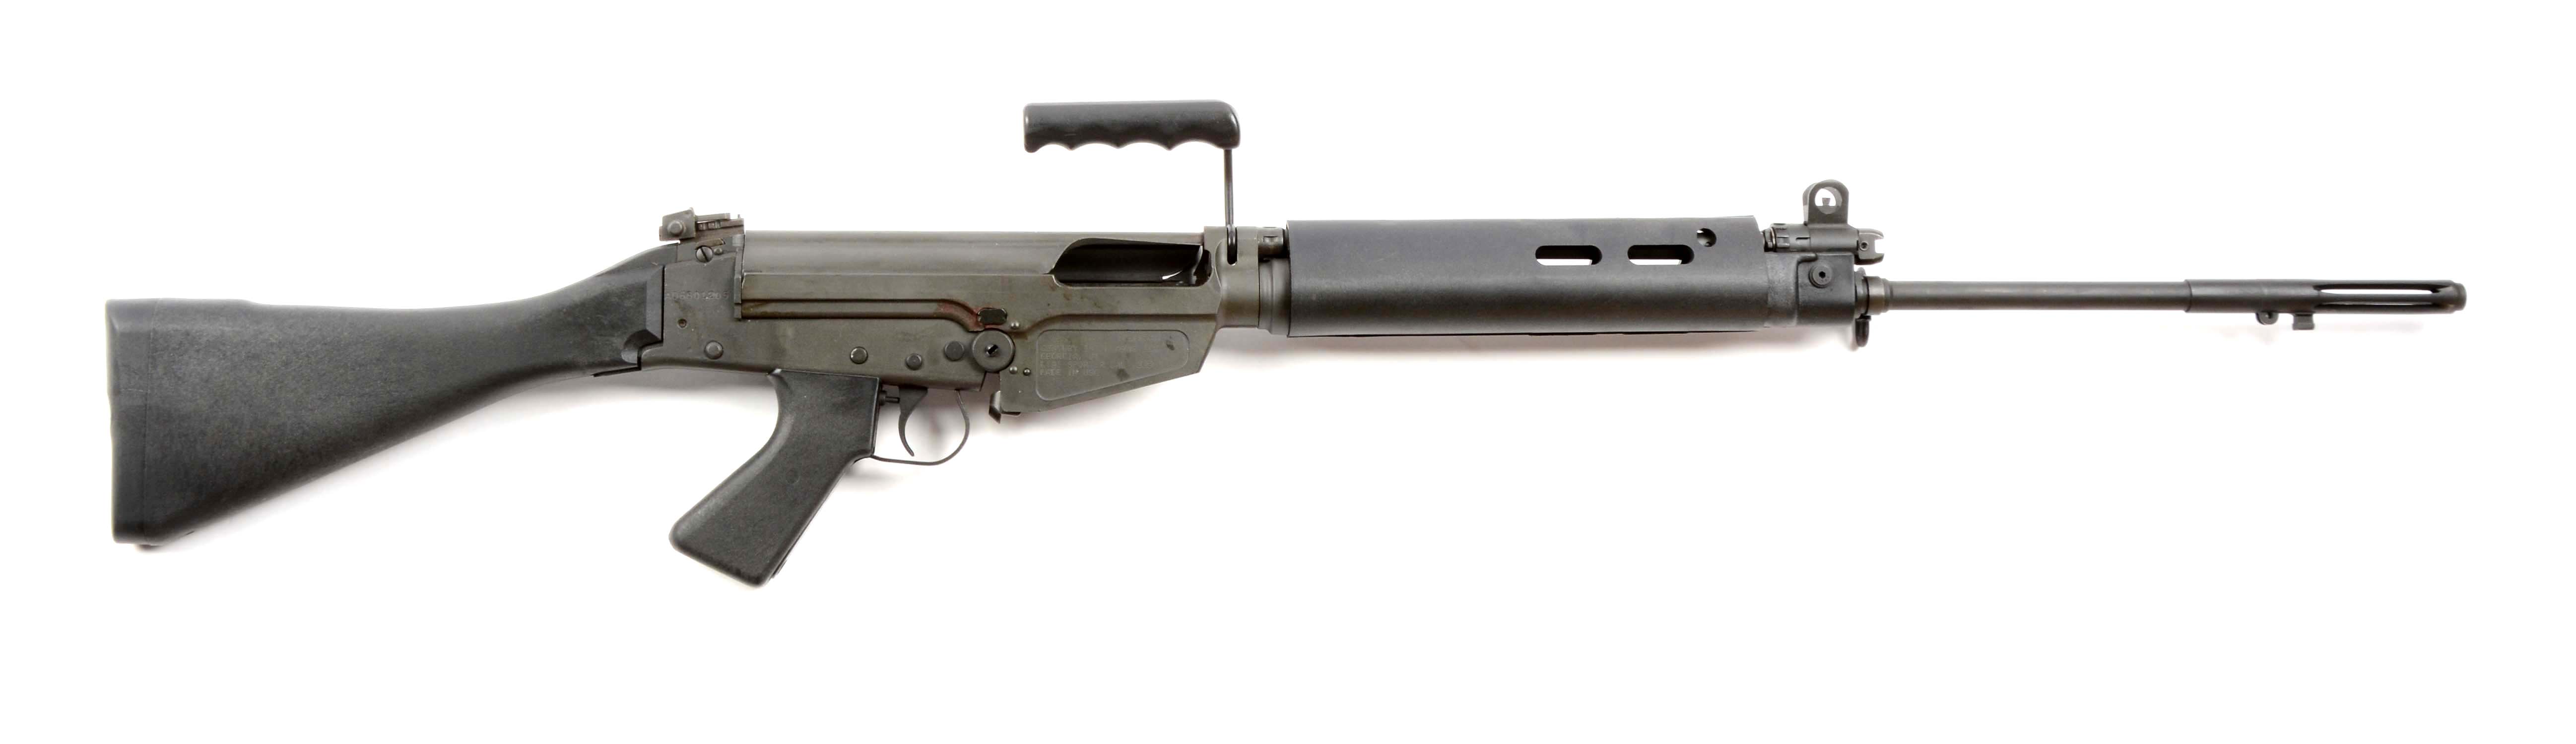 (M) century arms L1A1 sporter semi-automatic rifle. 